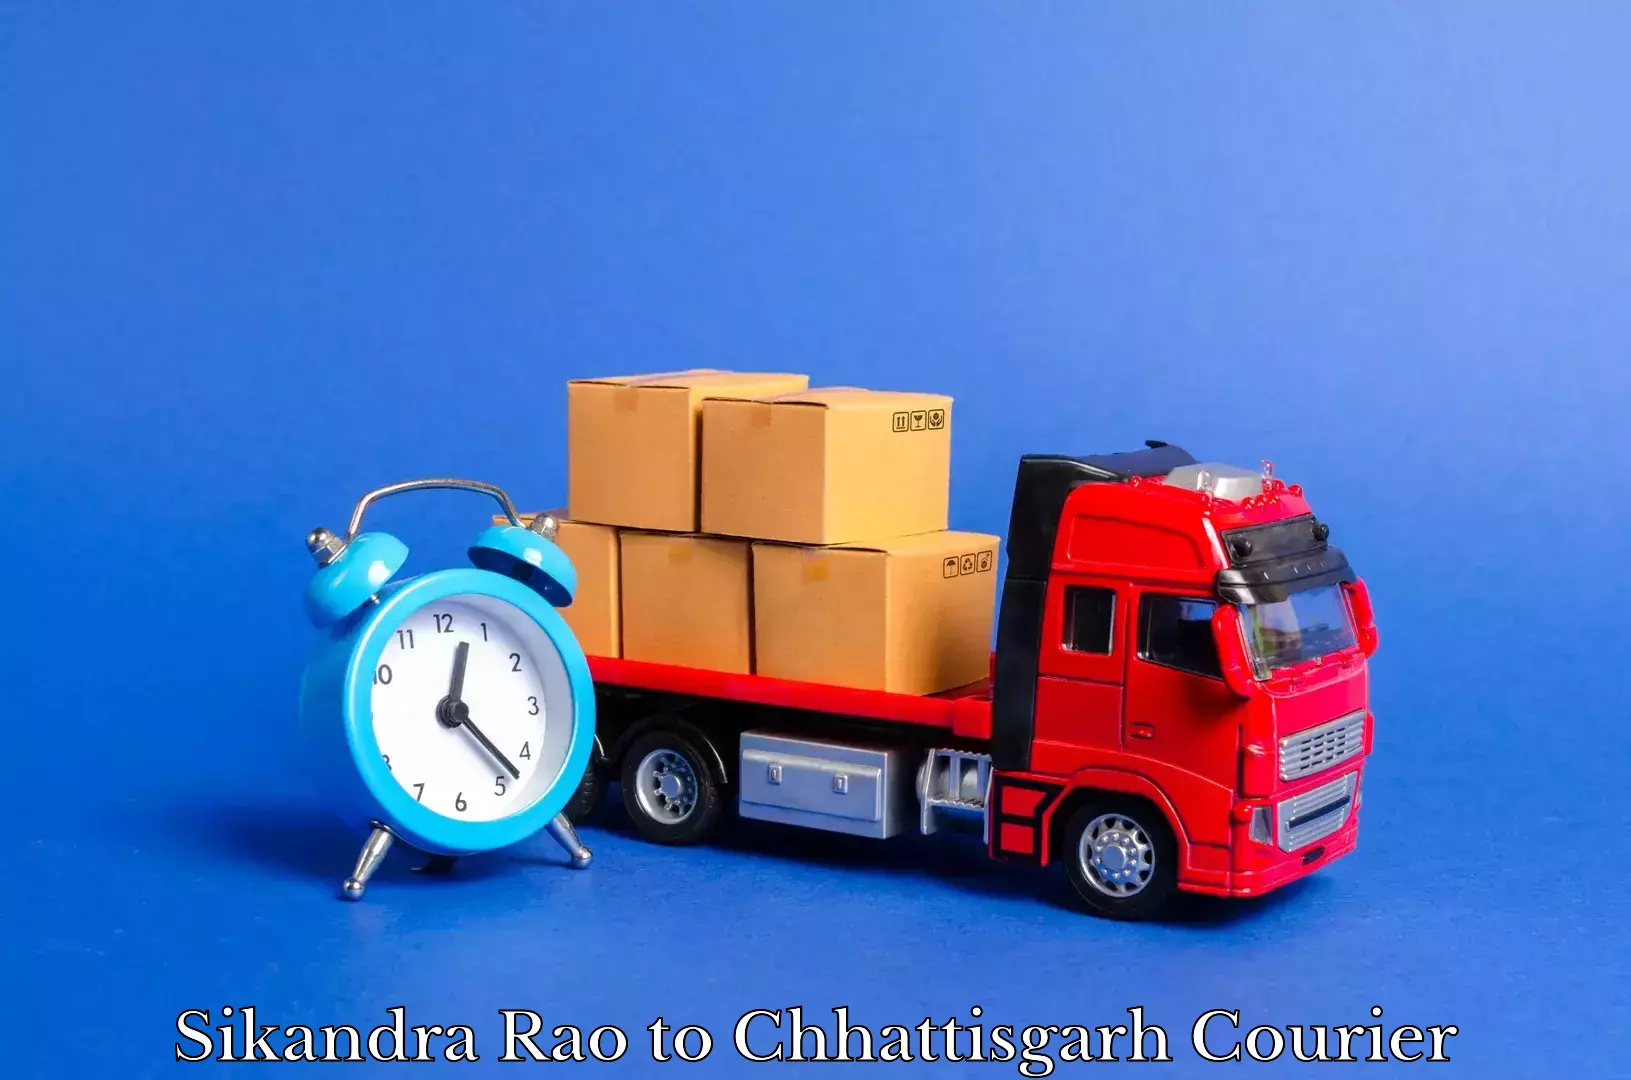 Cost-effective moving options Sikandra Rao to Korea Chhattisgarh